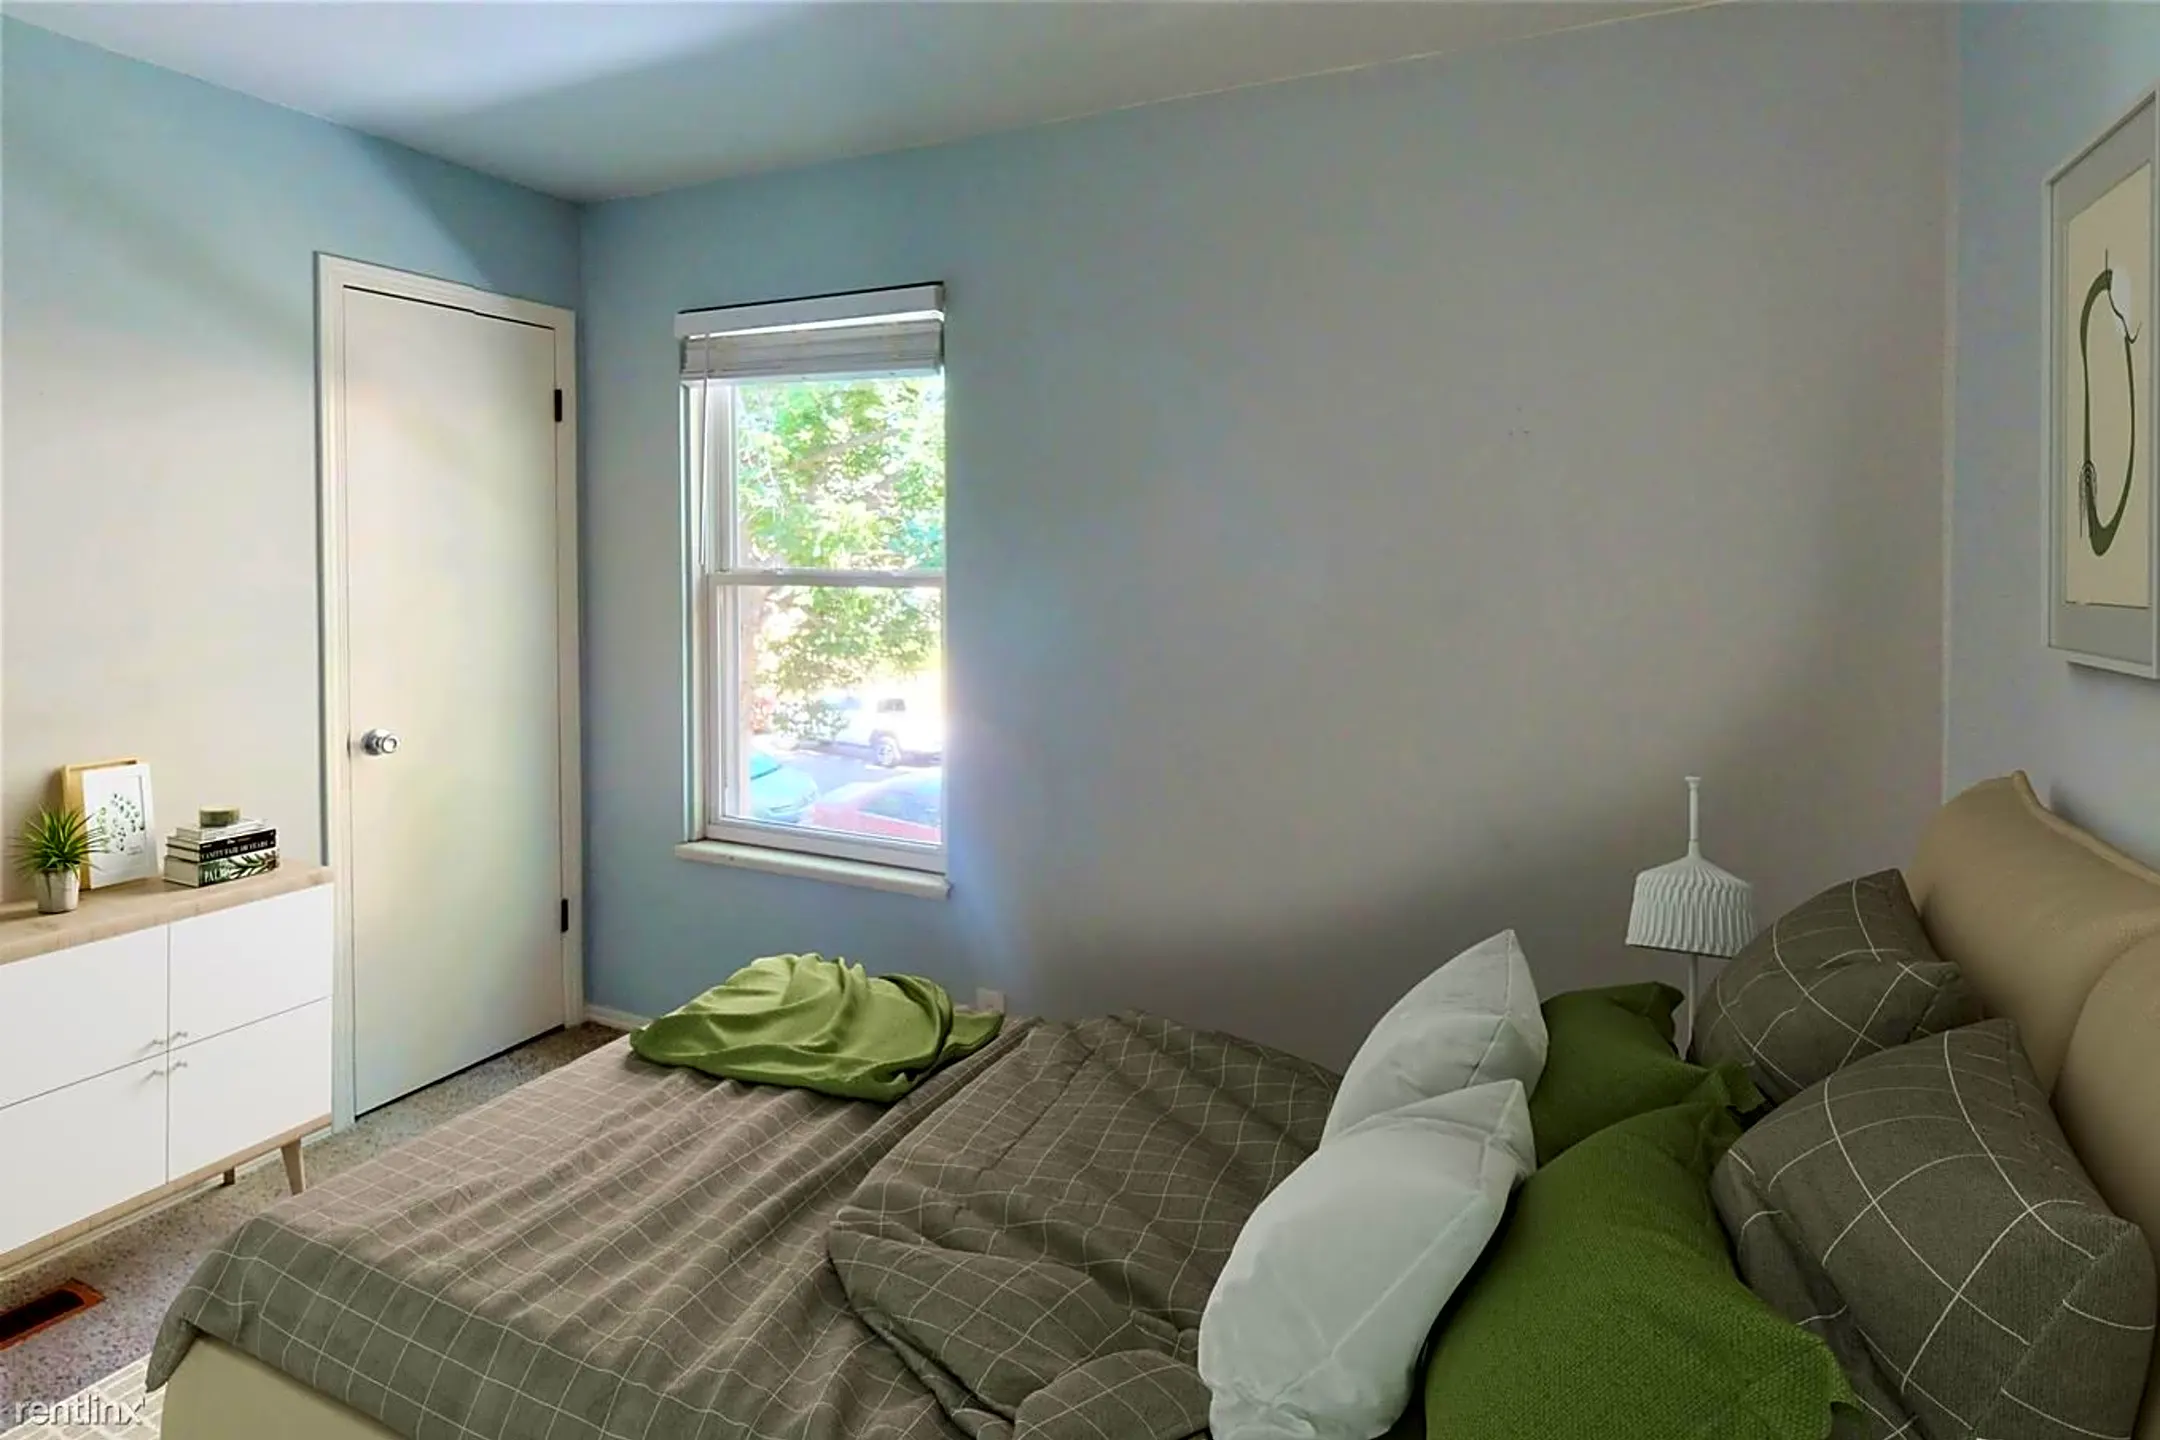 Bedroom - 2661 Osceola St - Denver, CO